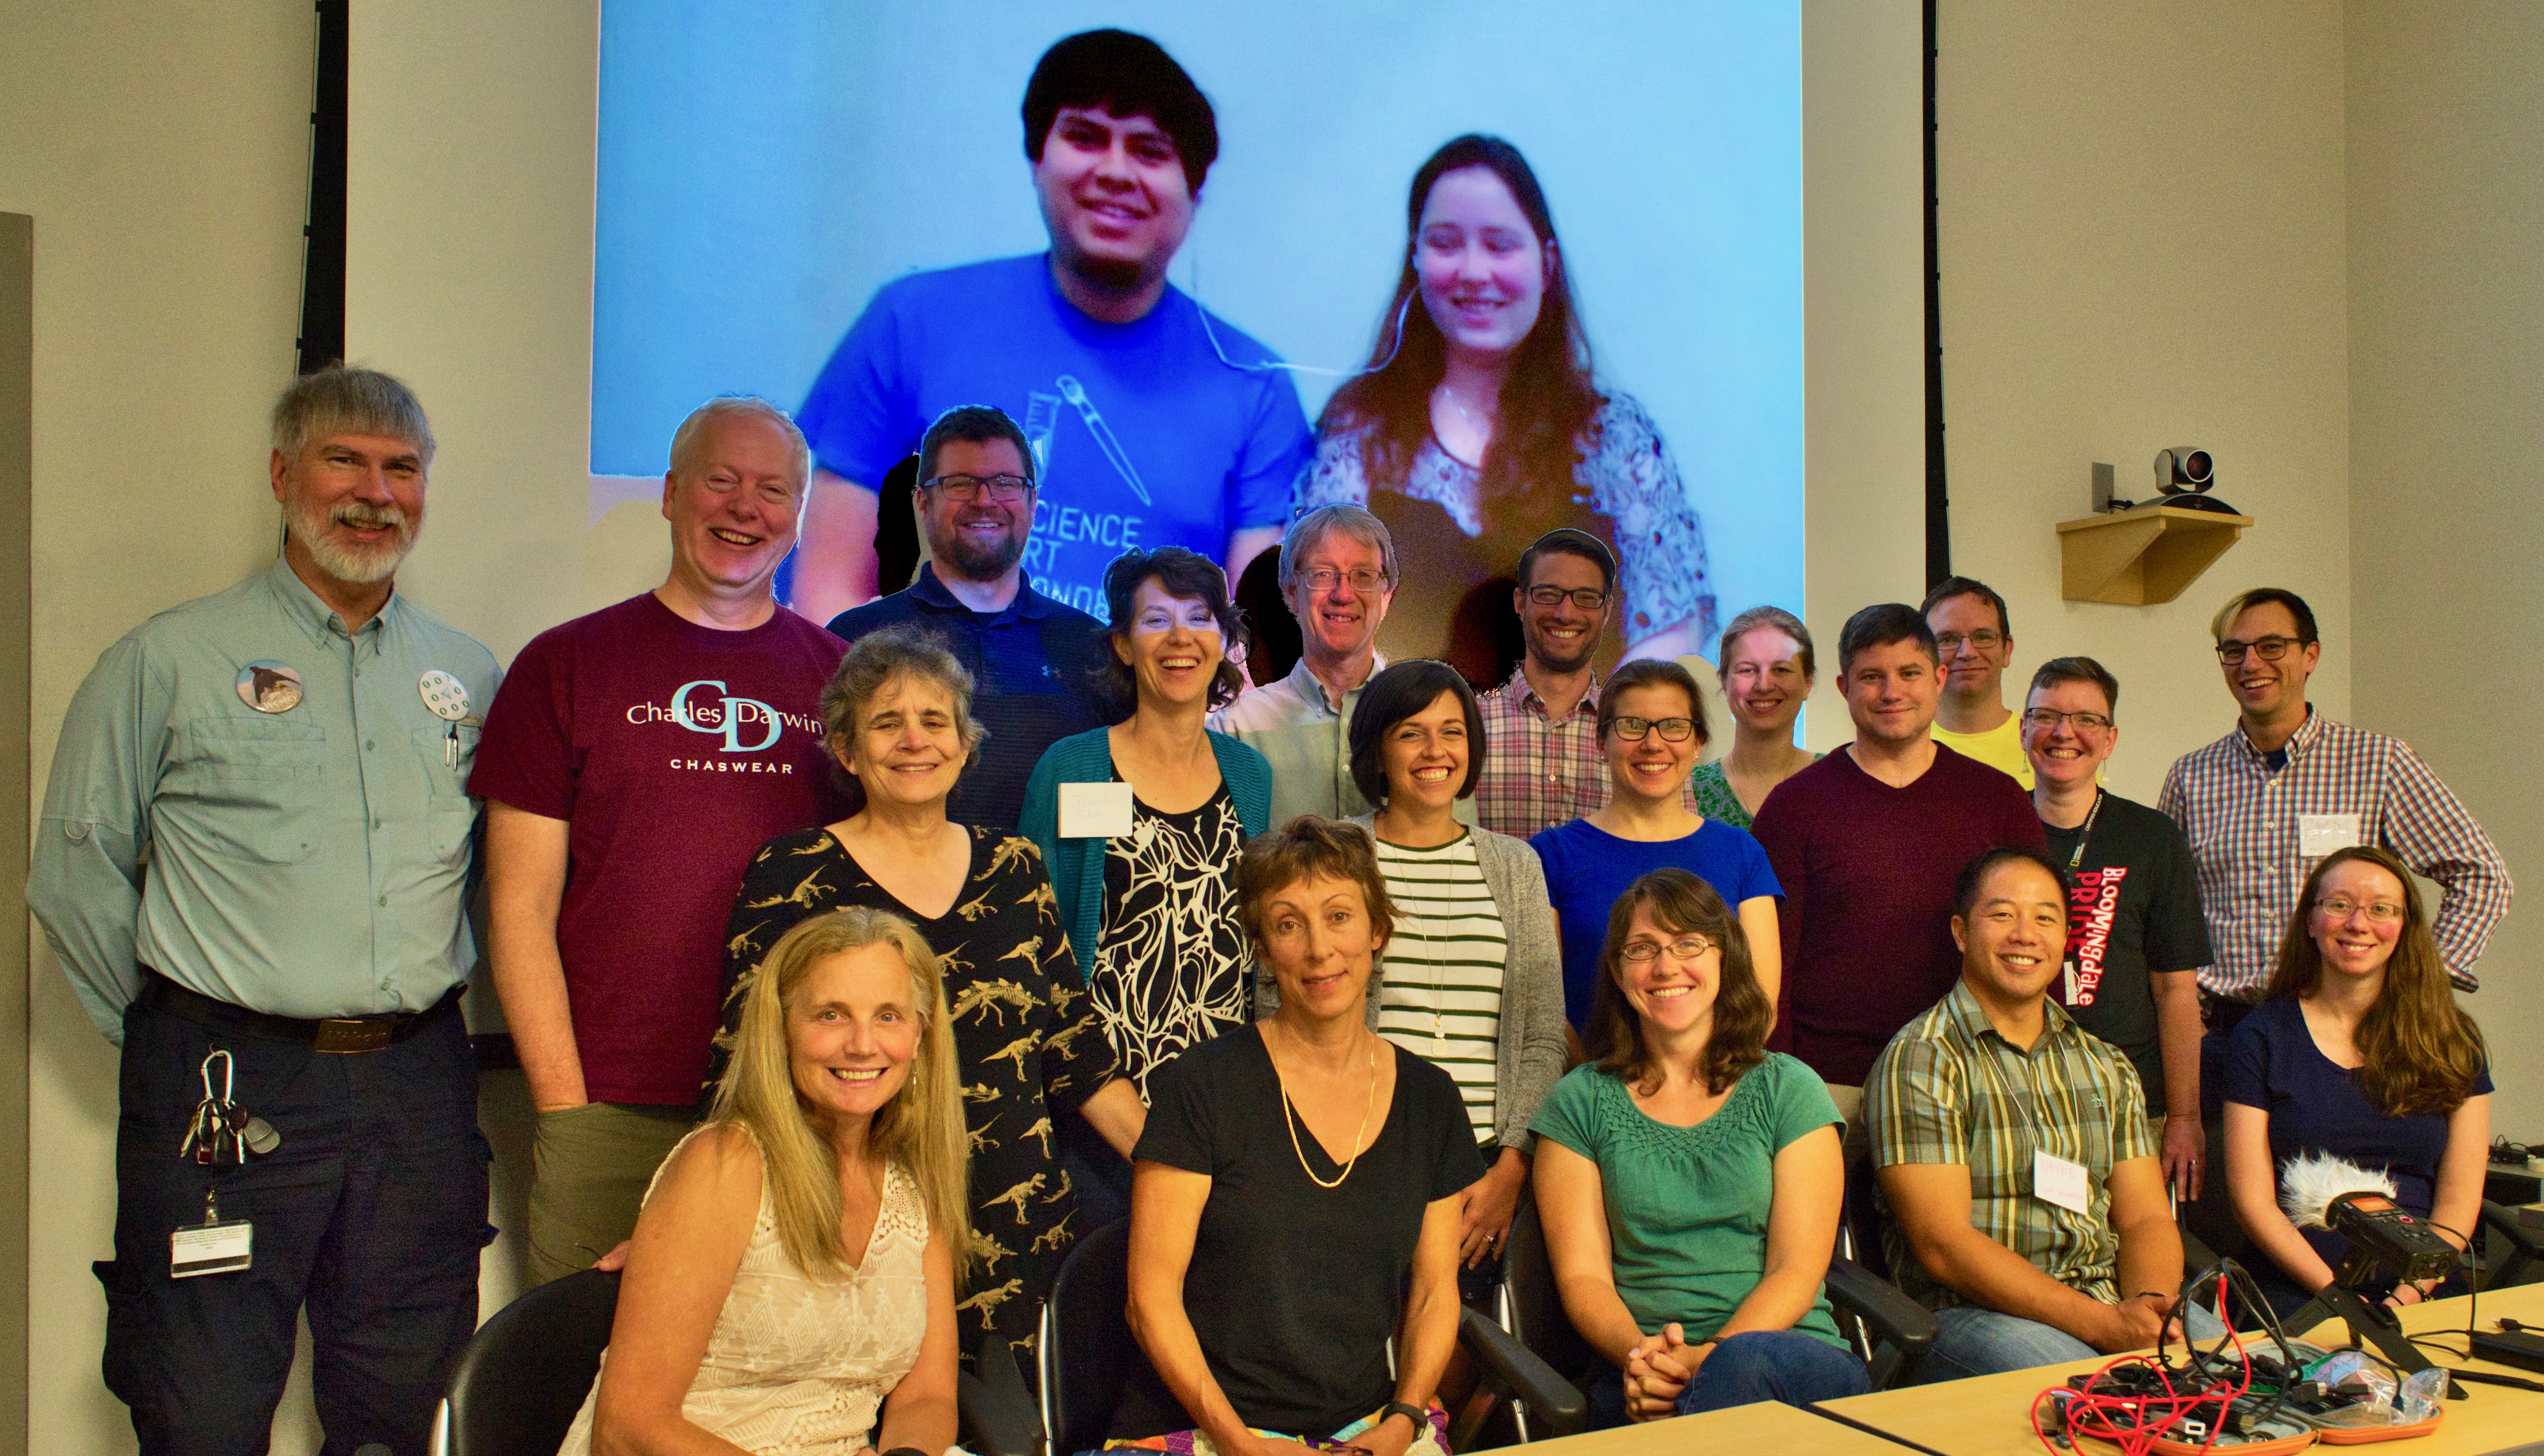 group photo in BEACON seminar room at MSU